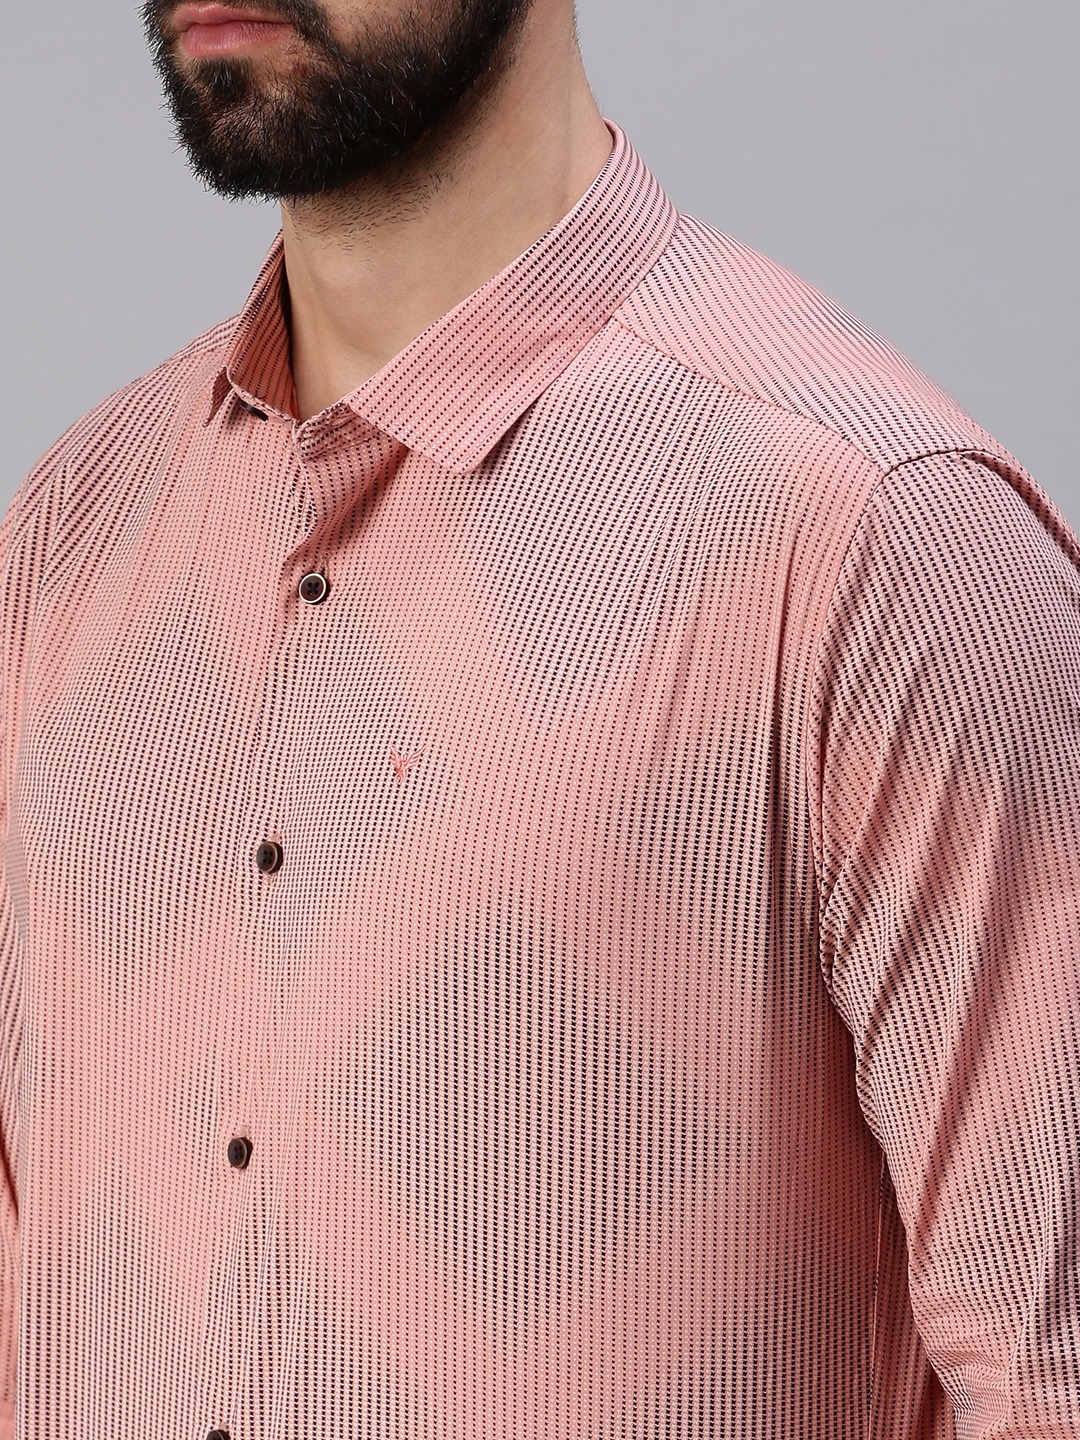 Men's Pink Cotton Printed Casual Shirts